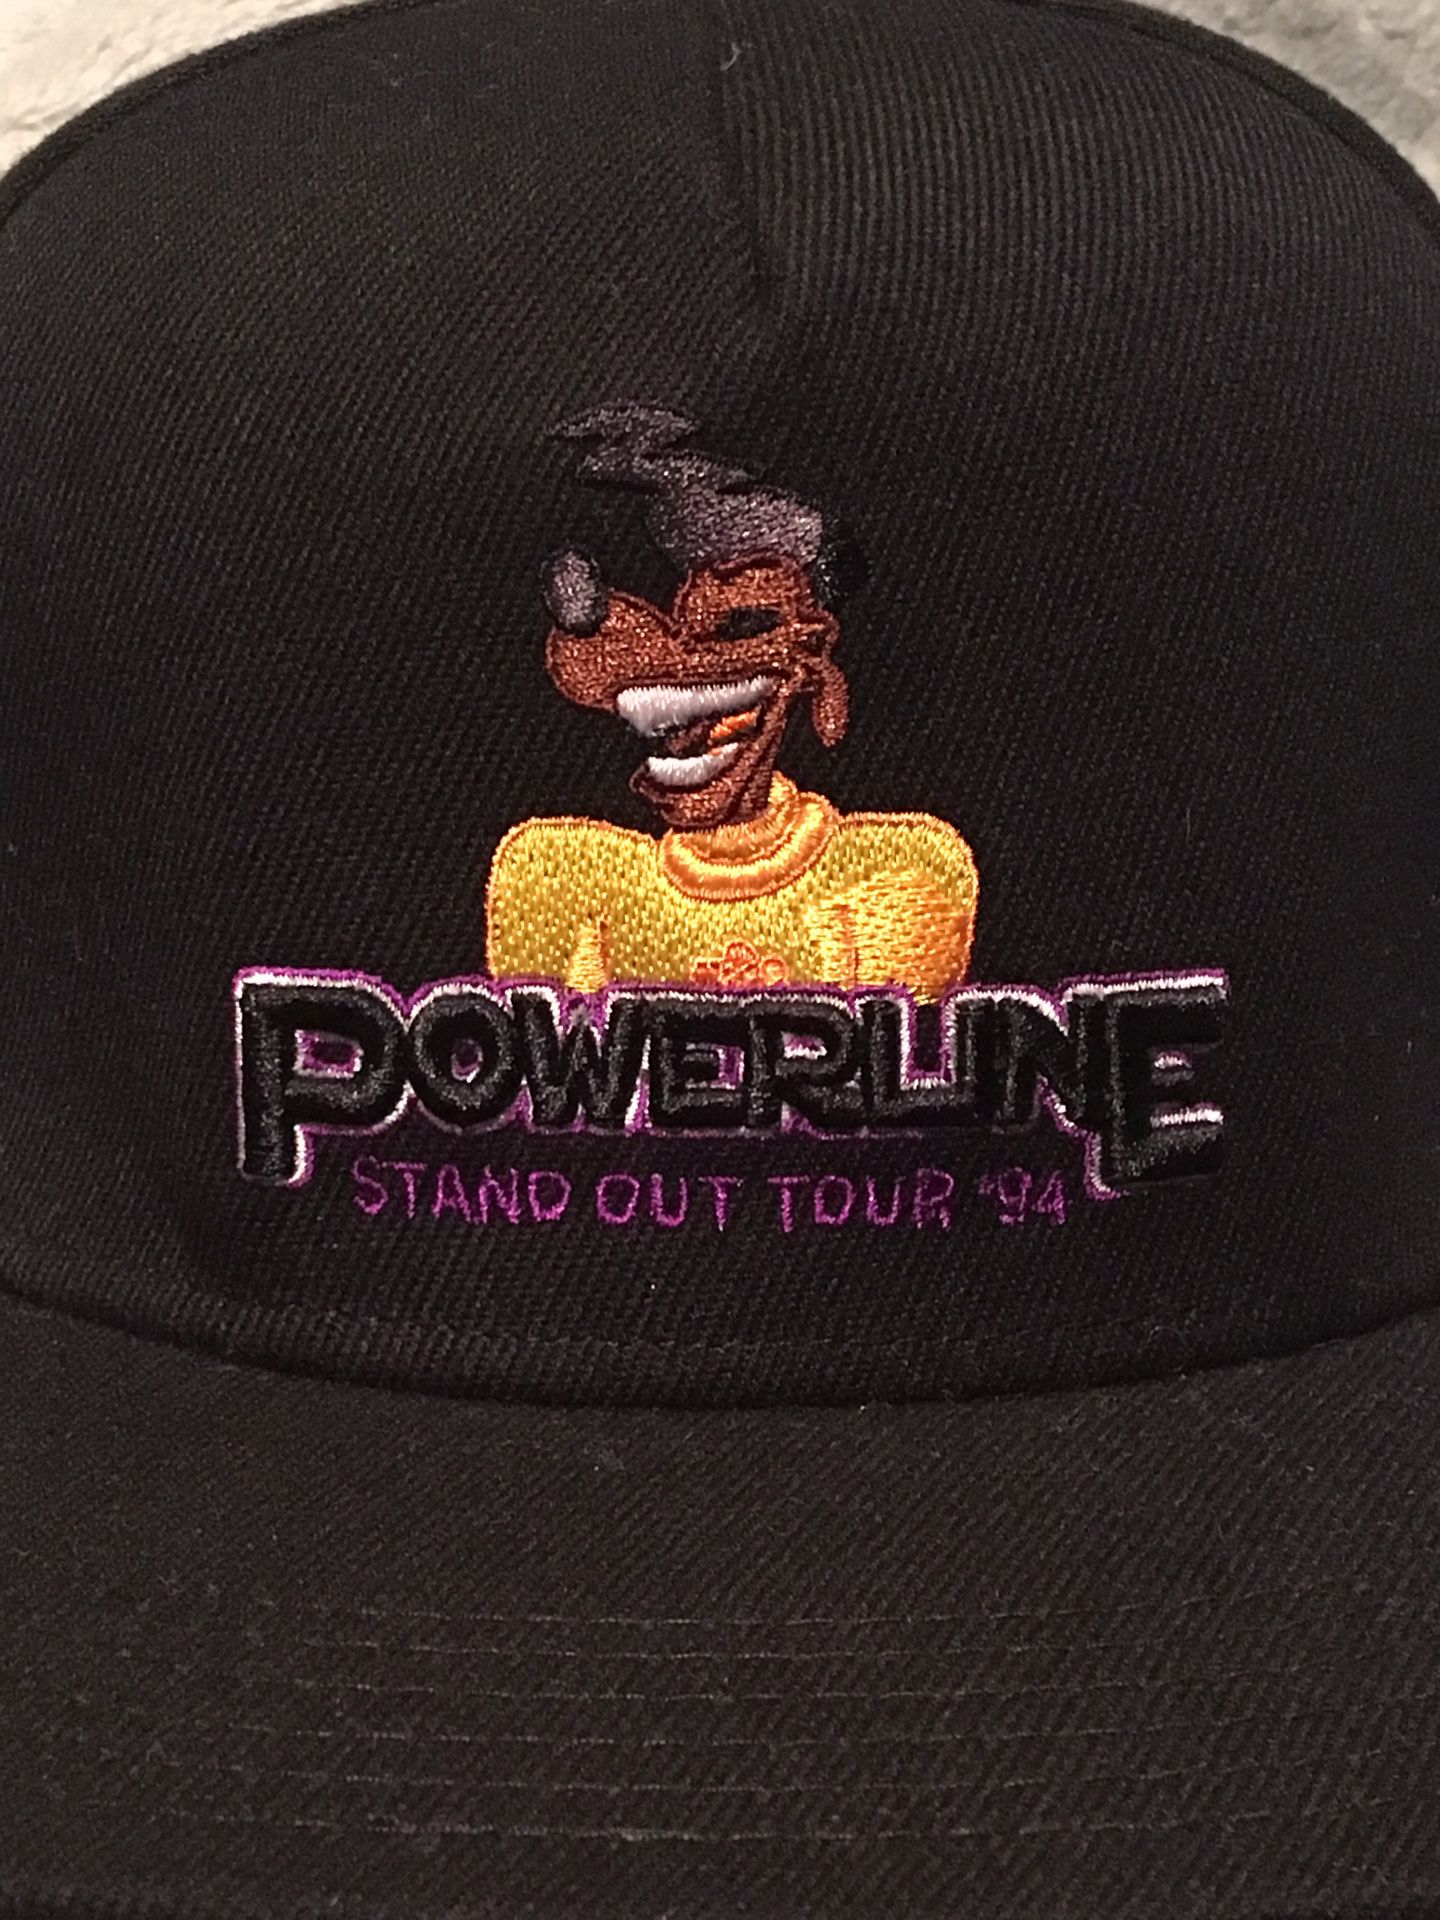 Disney’s Powerline hat